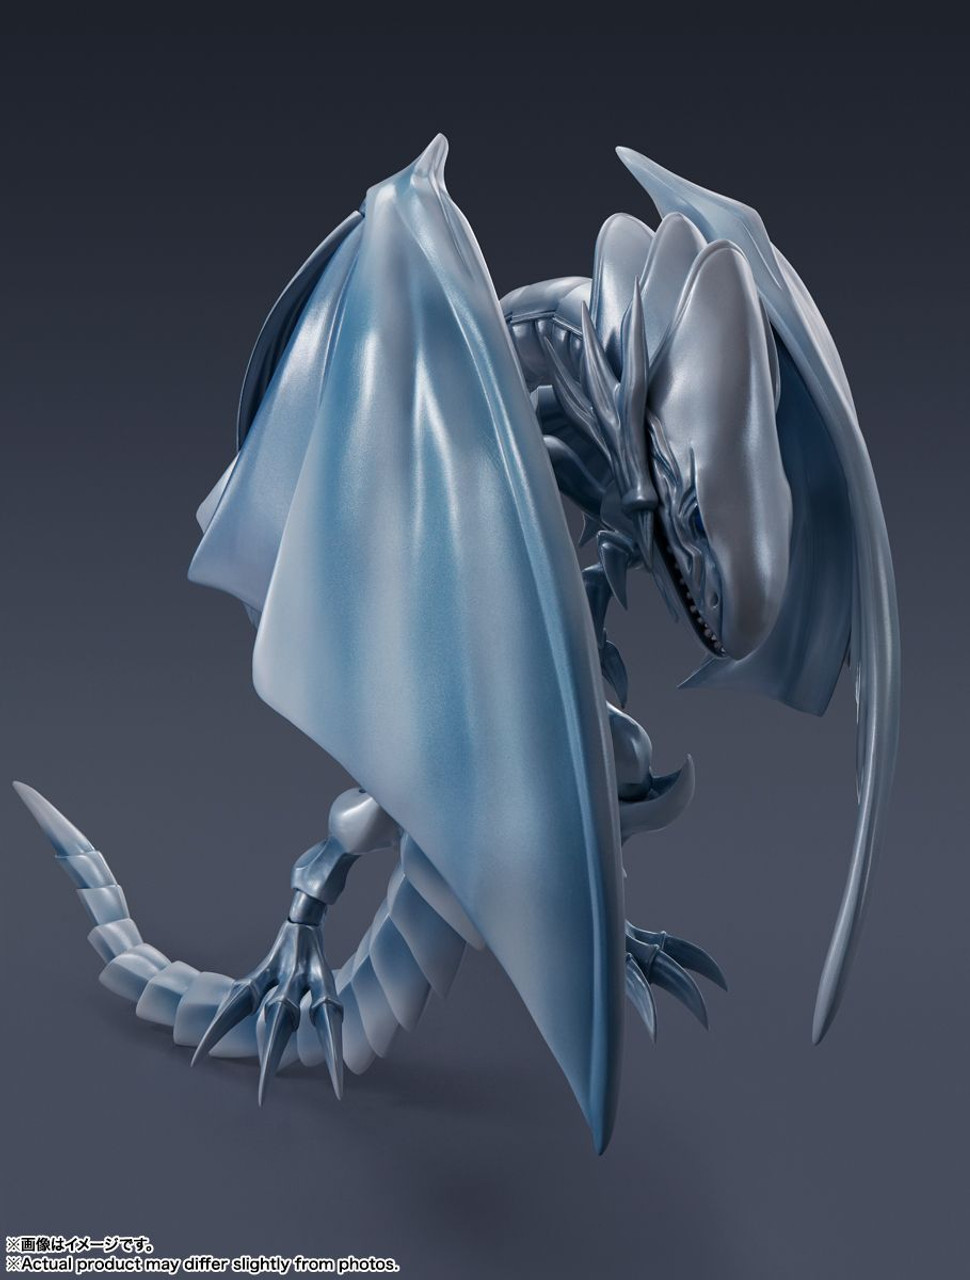 FIGURA S.H.MONSTERARTS YU-GI-OH! DUEL MONSTERS BLUE EYES WHITE DRAGON TAMASHII NATIONS